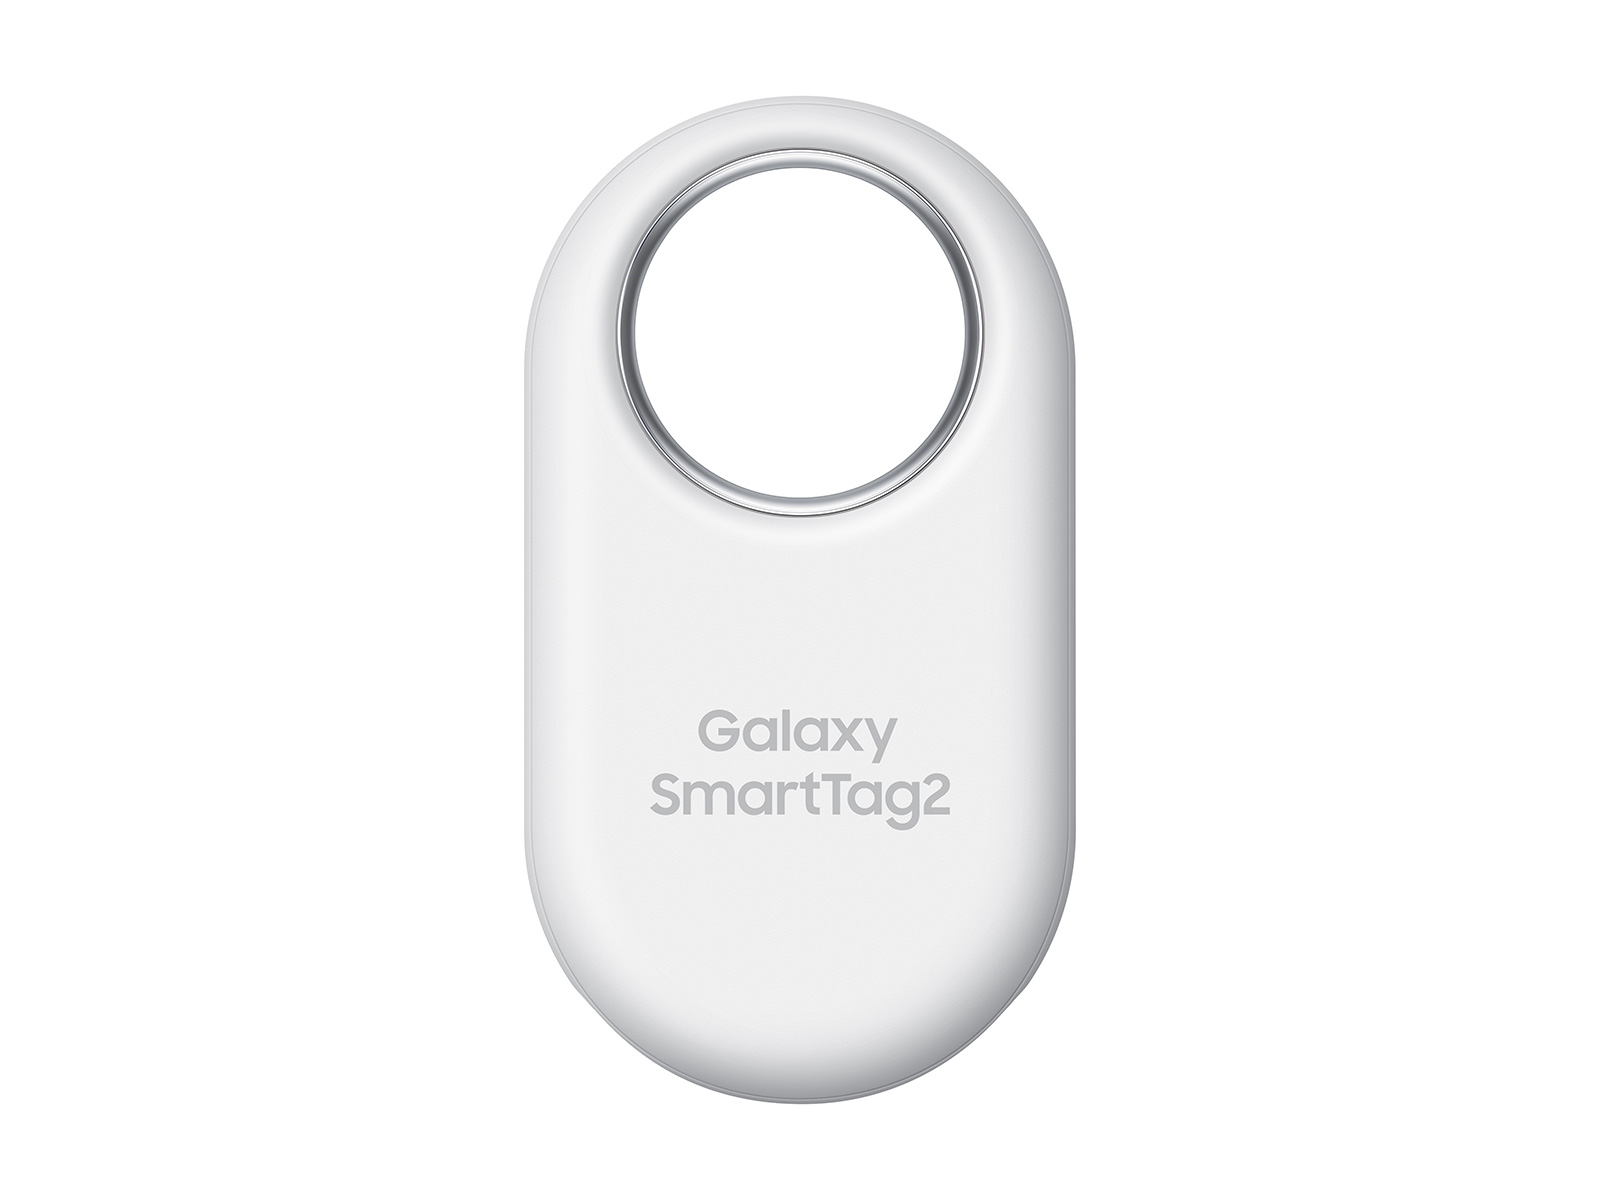 Galaxy SmartTag2, White Mobile Accessories - EI-T5600BWEGUS